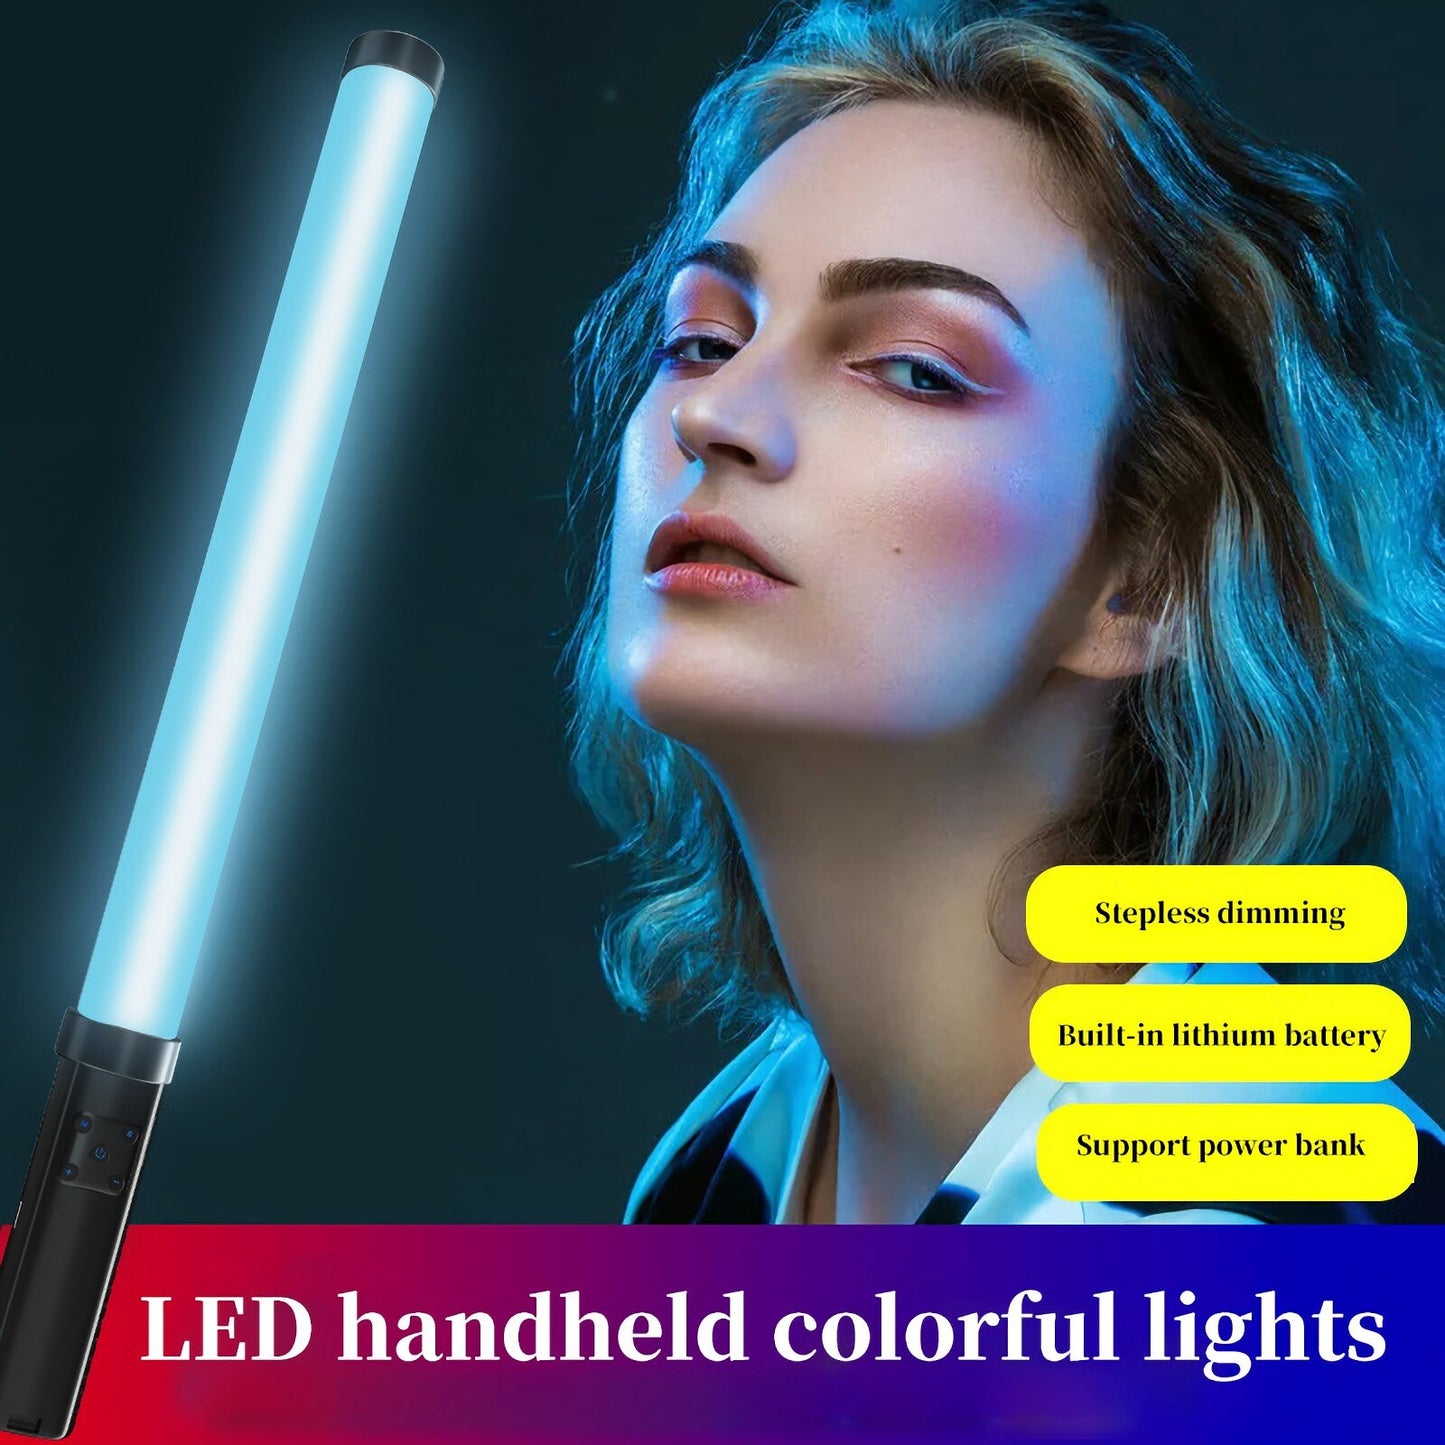 Portable RGB LED Light Wand